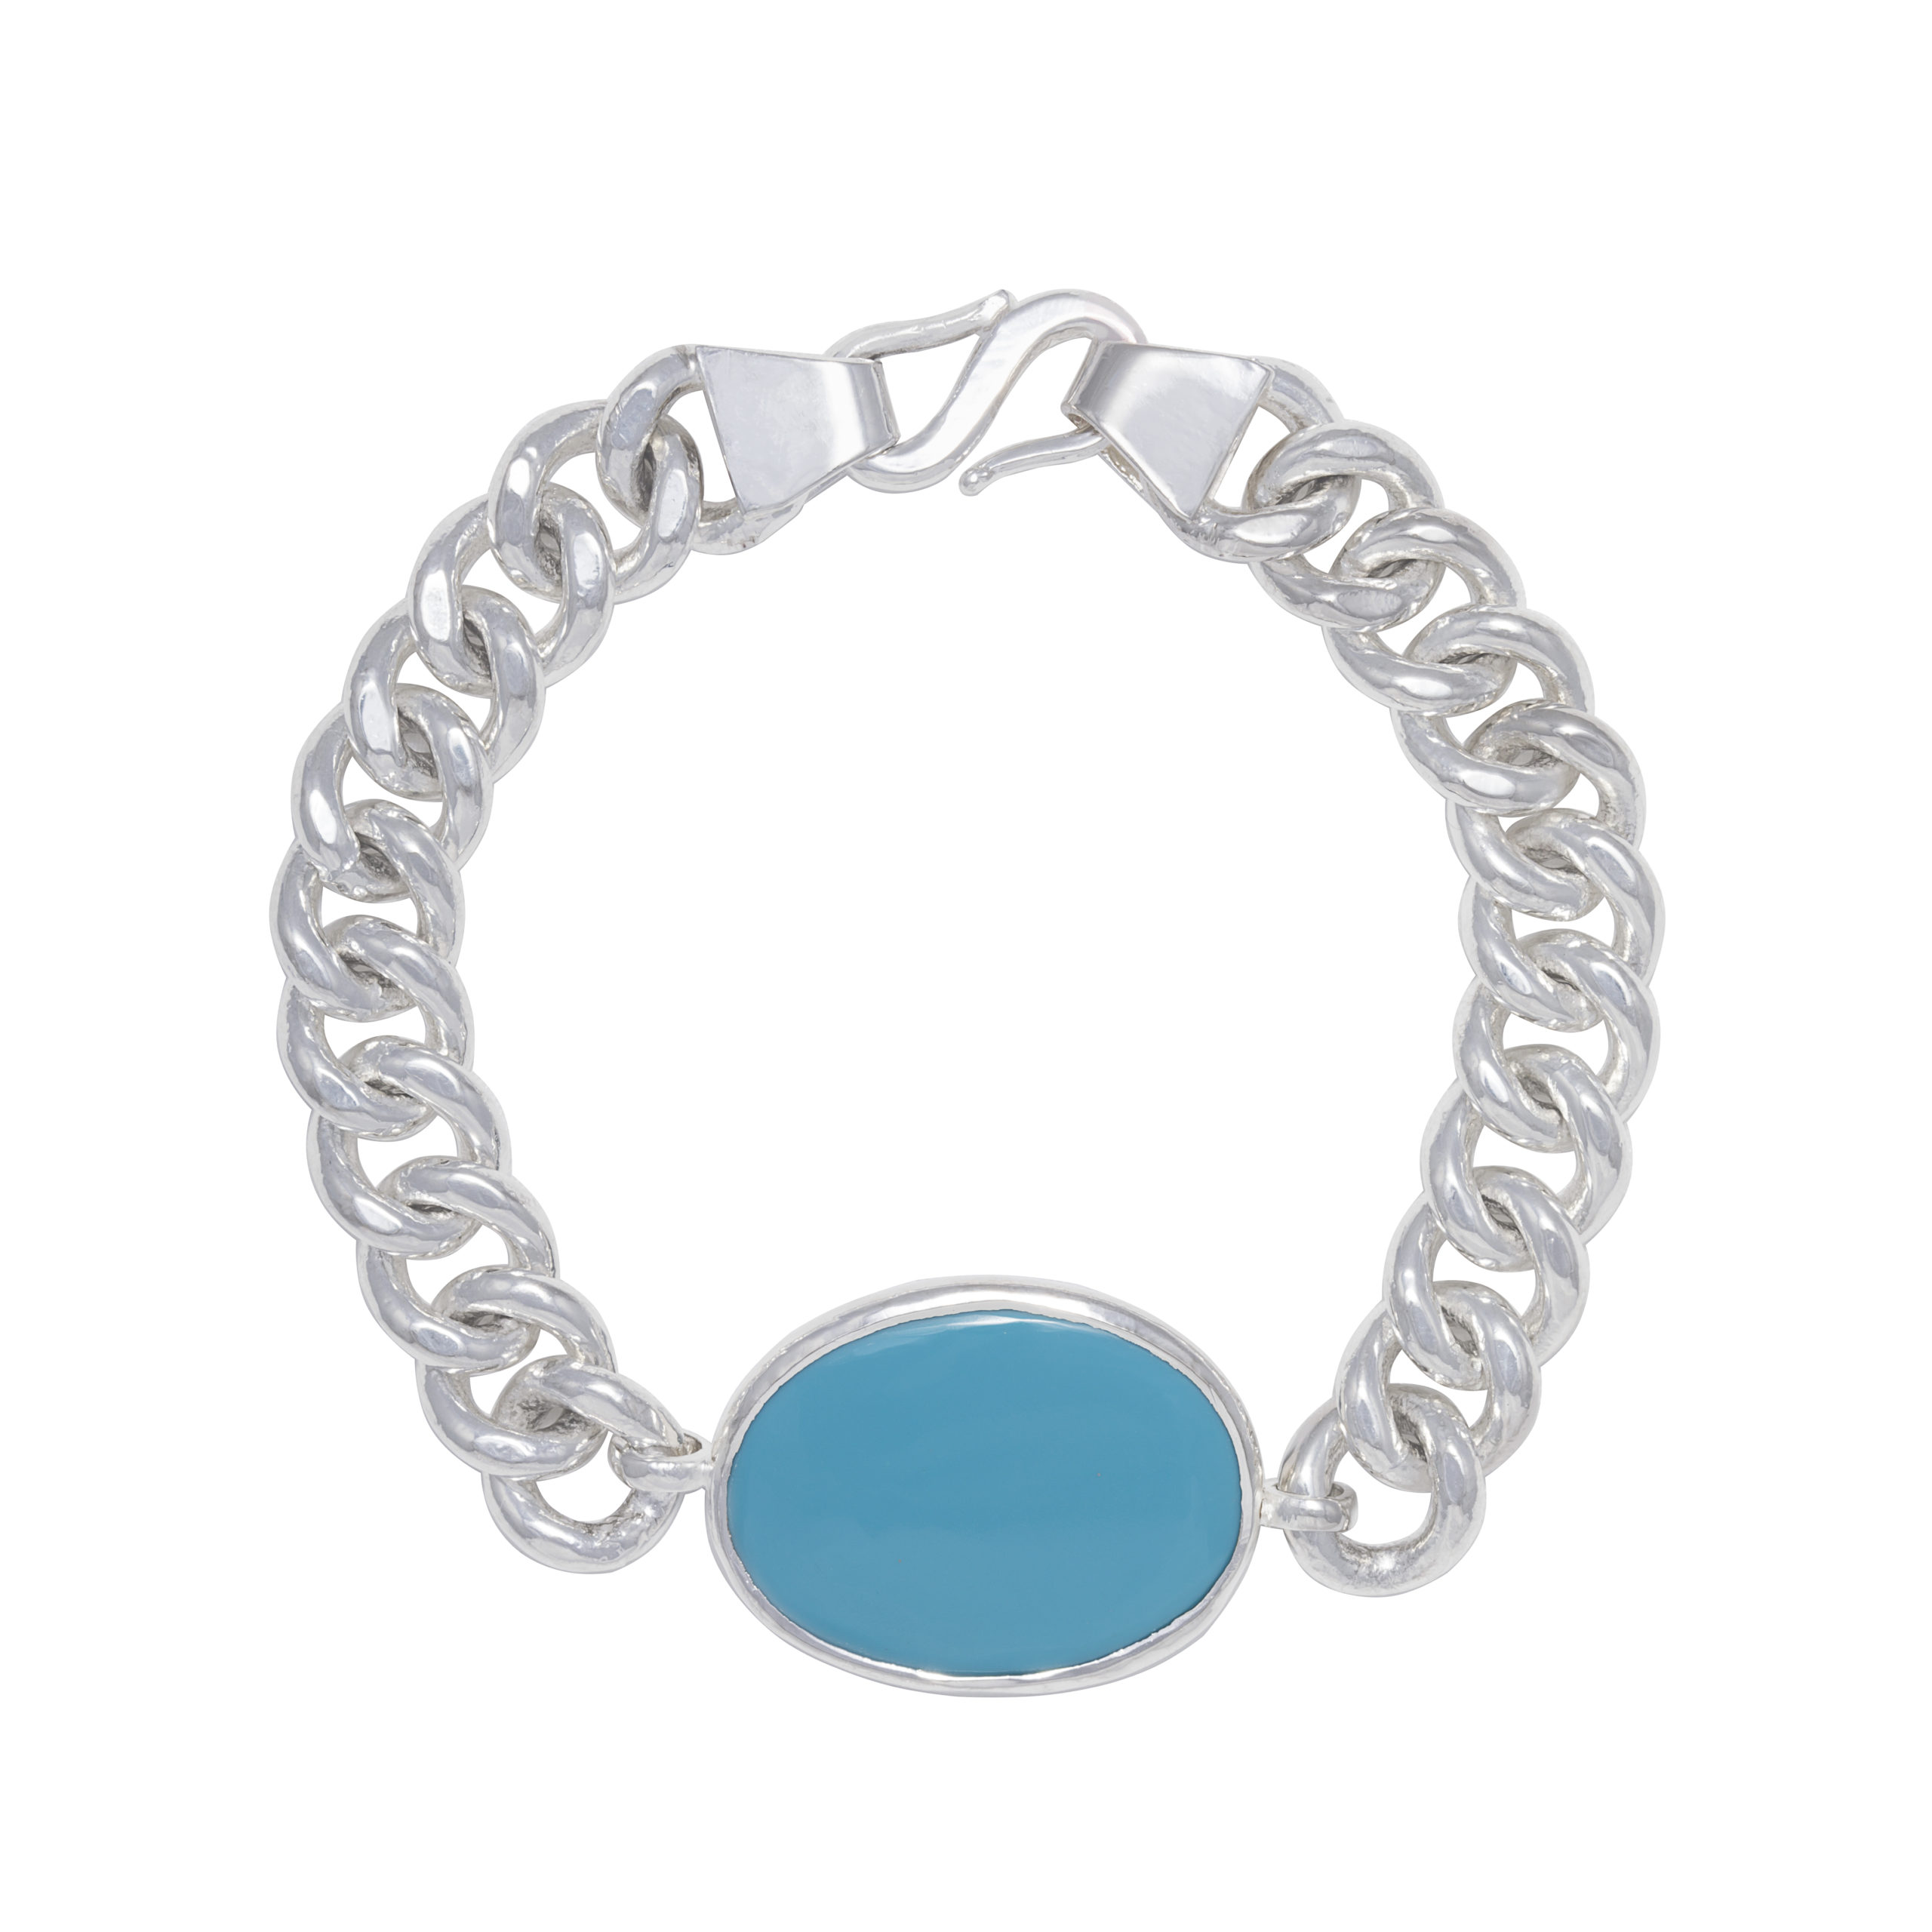 Orissa Gems  birth gemstone  semi precious beads  salman khan bracelet   silver jewelry